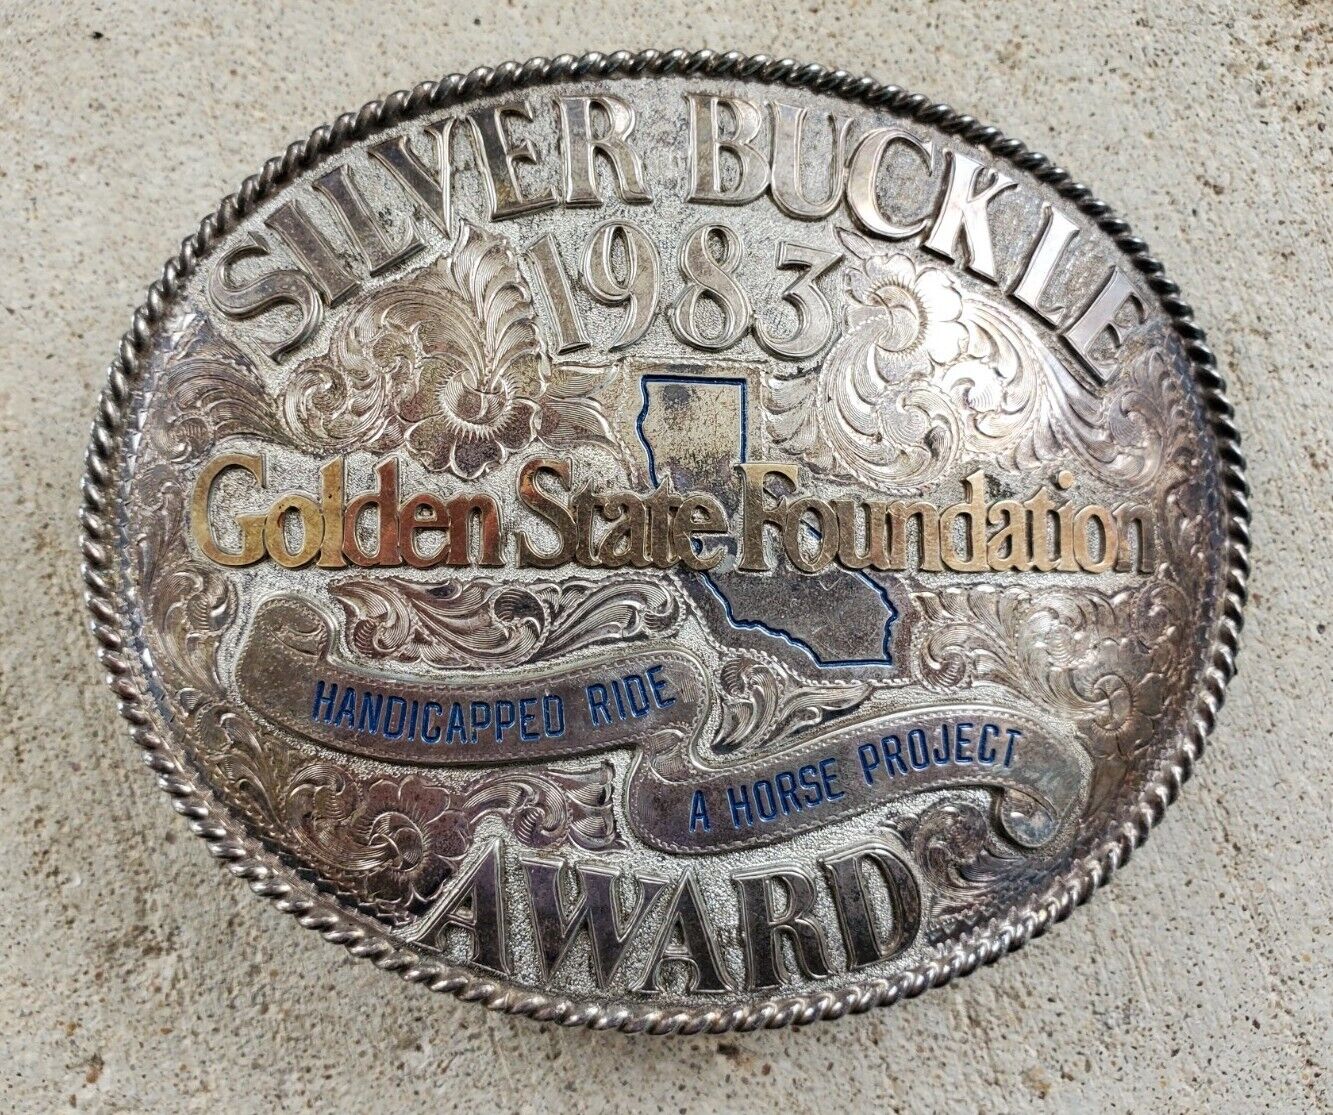 Vintage 1983 SILVERADO SILVERSMITHS Sterling Silver & Gold Filled Trophy Buckle